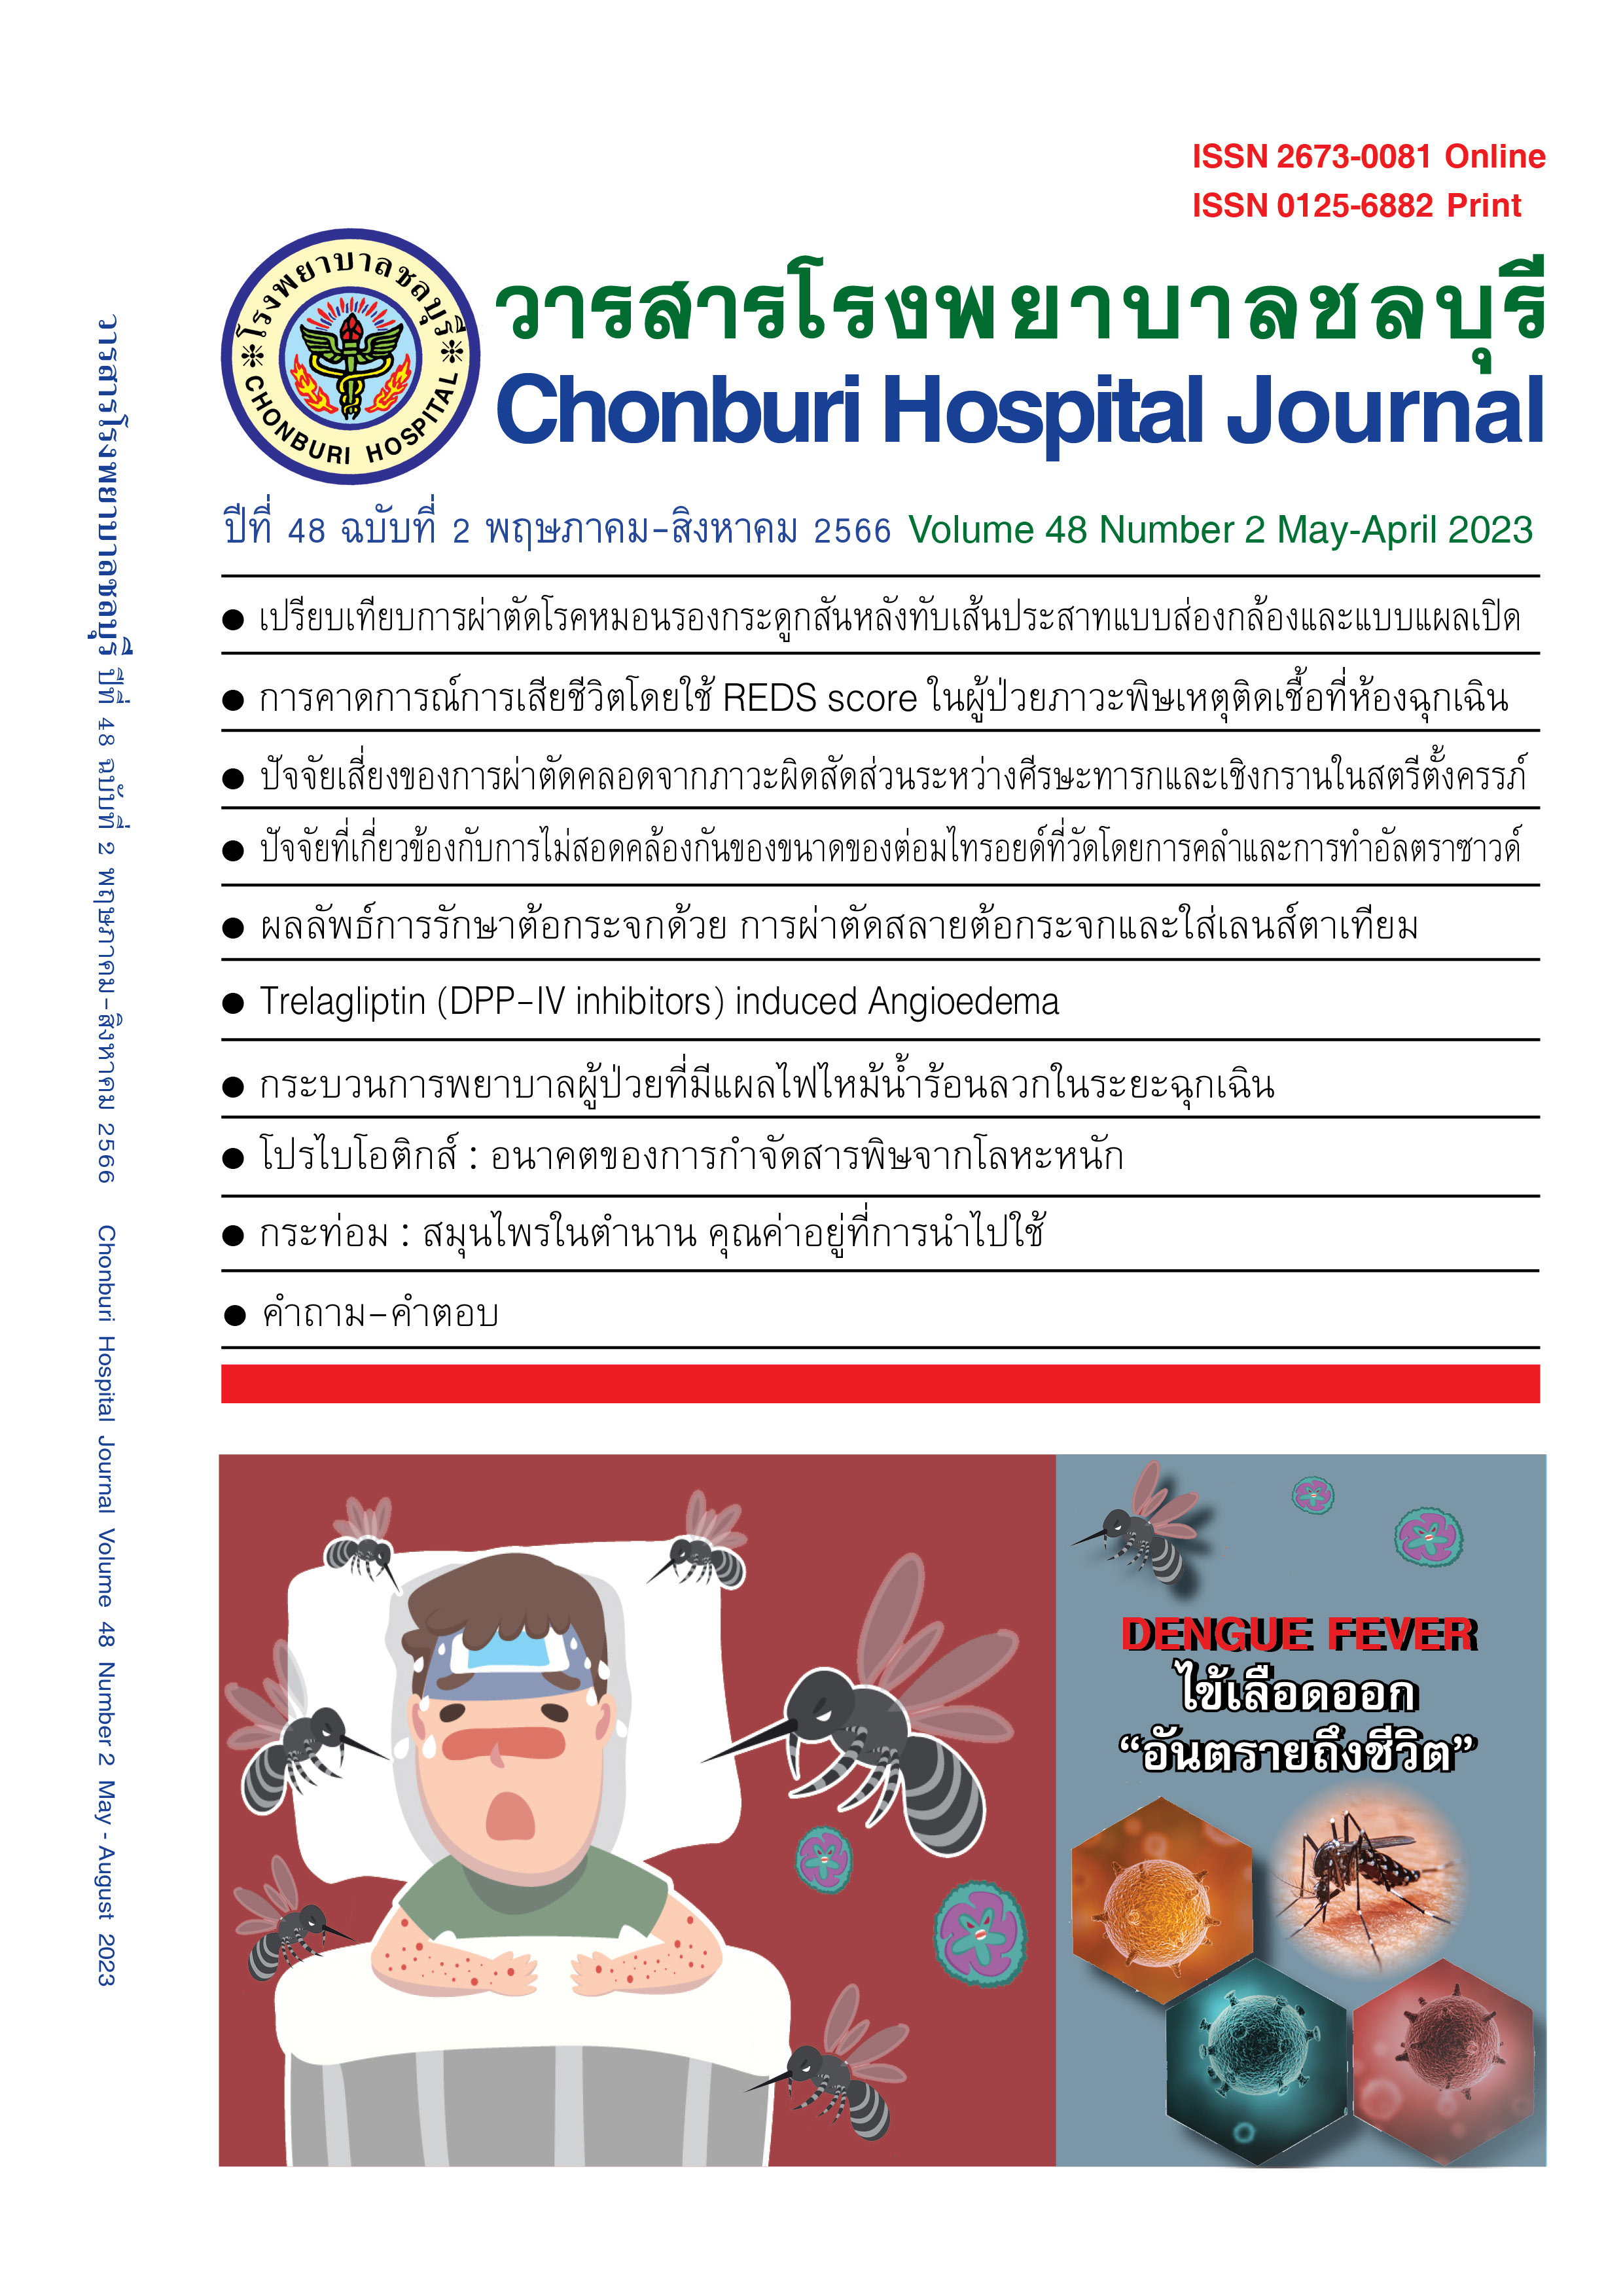 Chonburi Hospital Journal